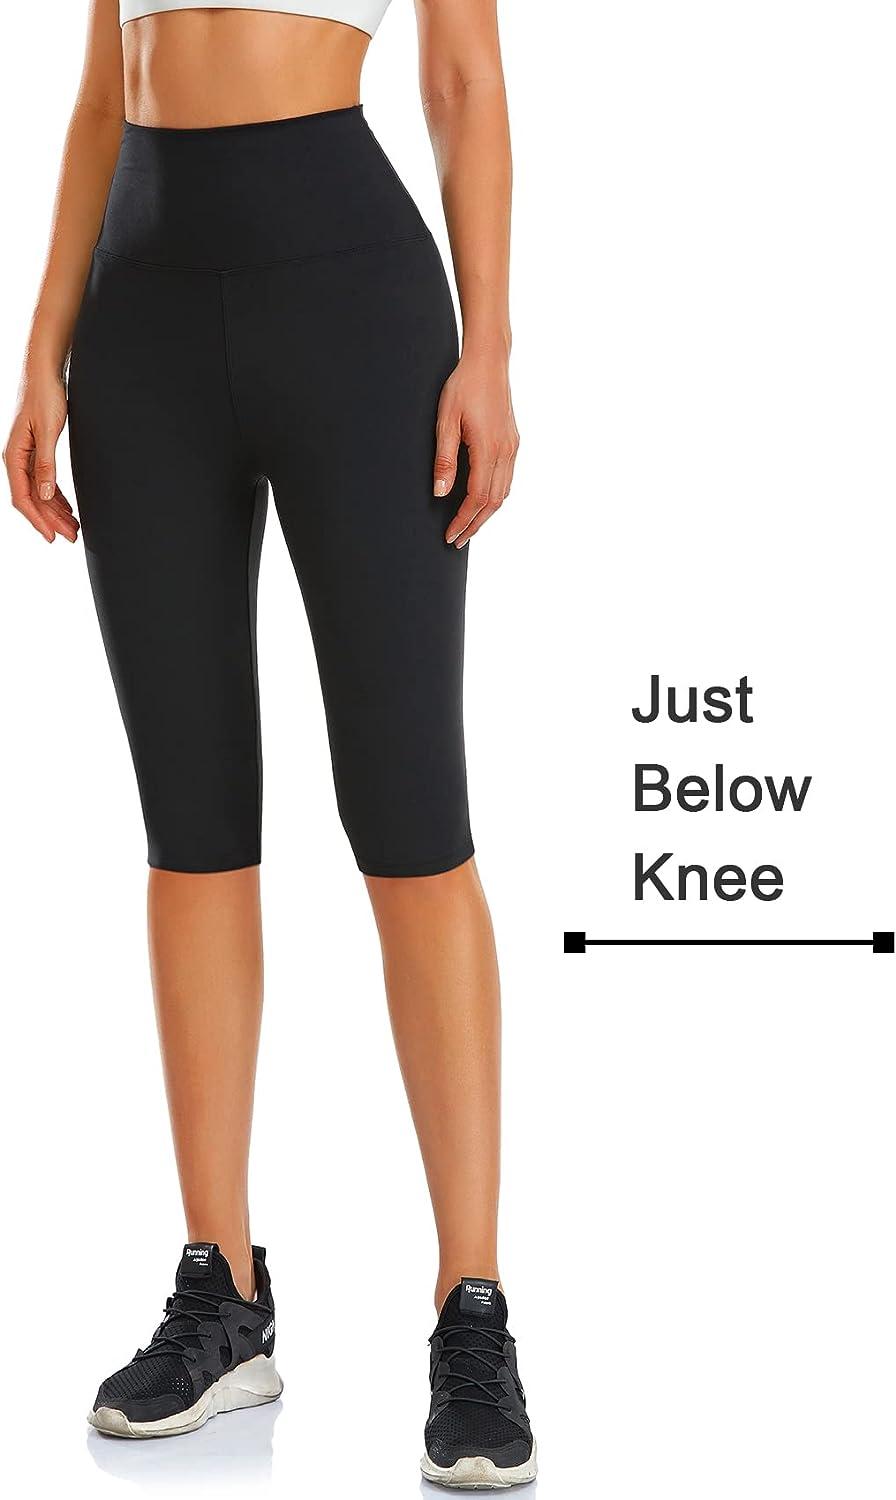 Women's Knee Length Leggings-High Waisted Capri Pants Biker Shorts for Women  Yoga Workout Exercise Short Casual Summer 01-black,black,black(pockets)  Large-X-Large